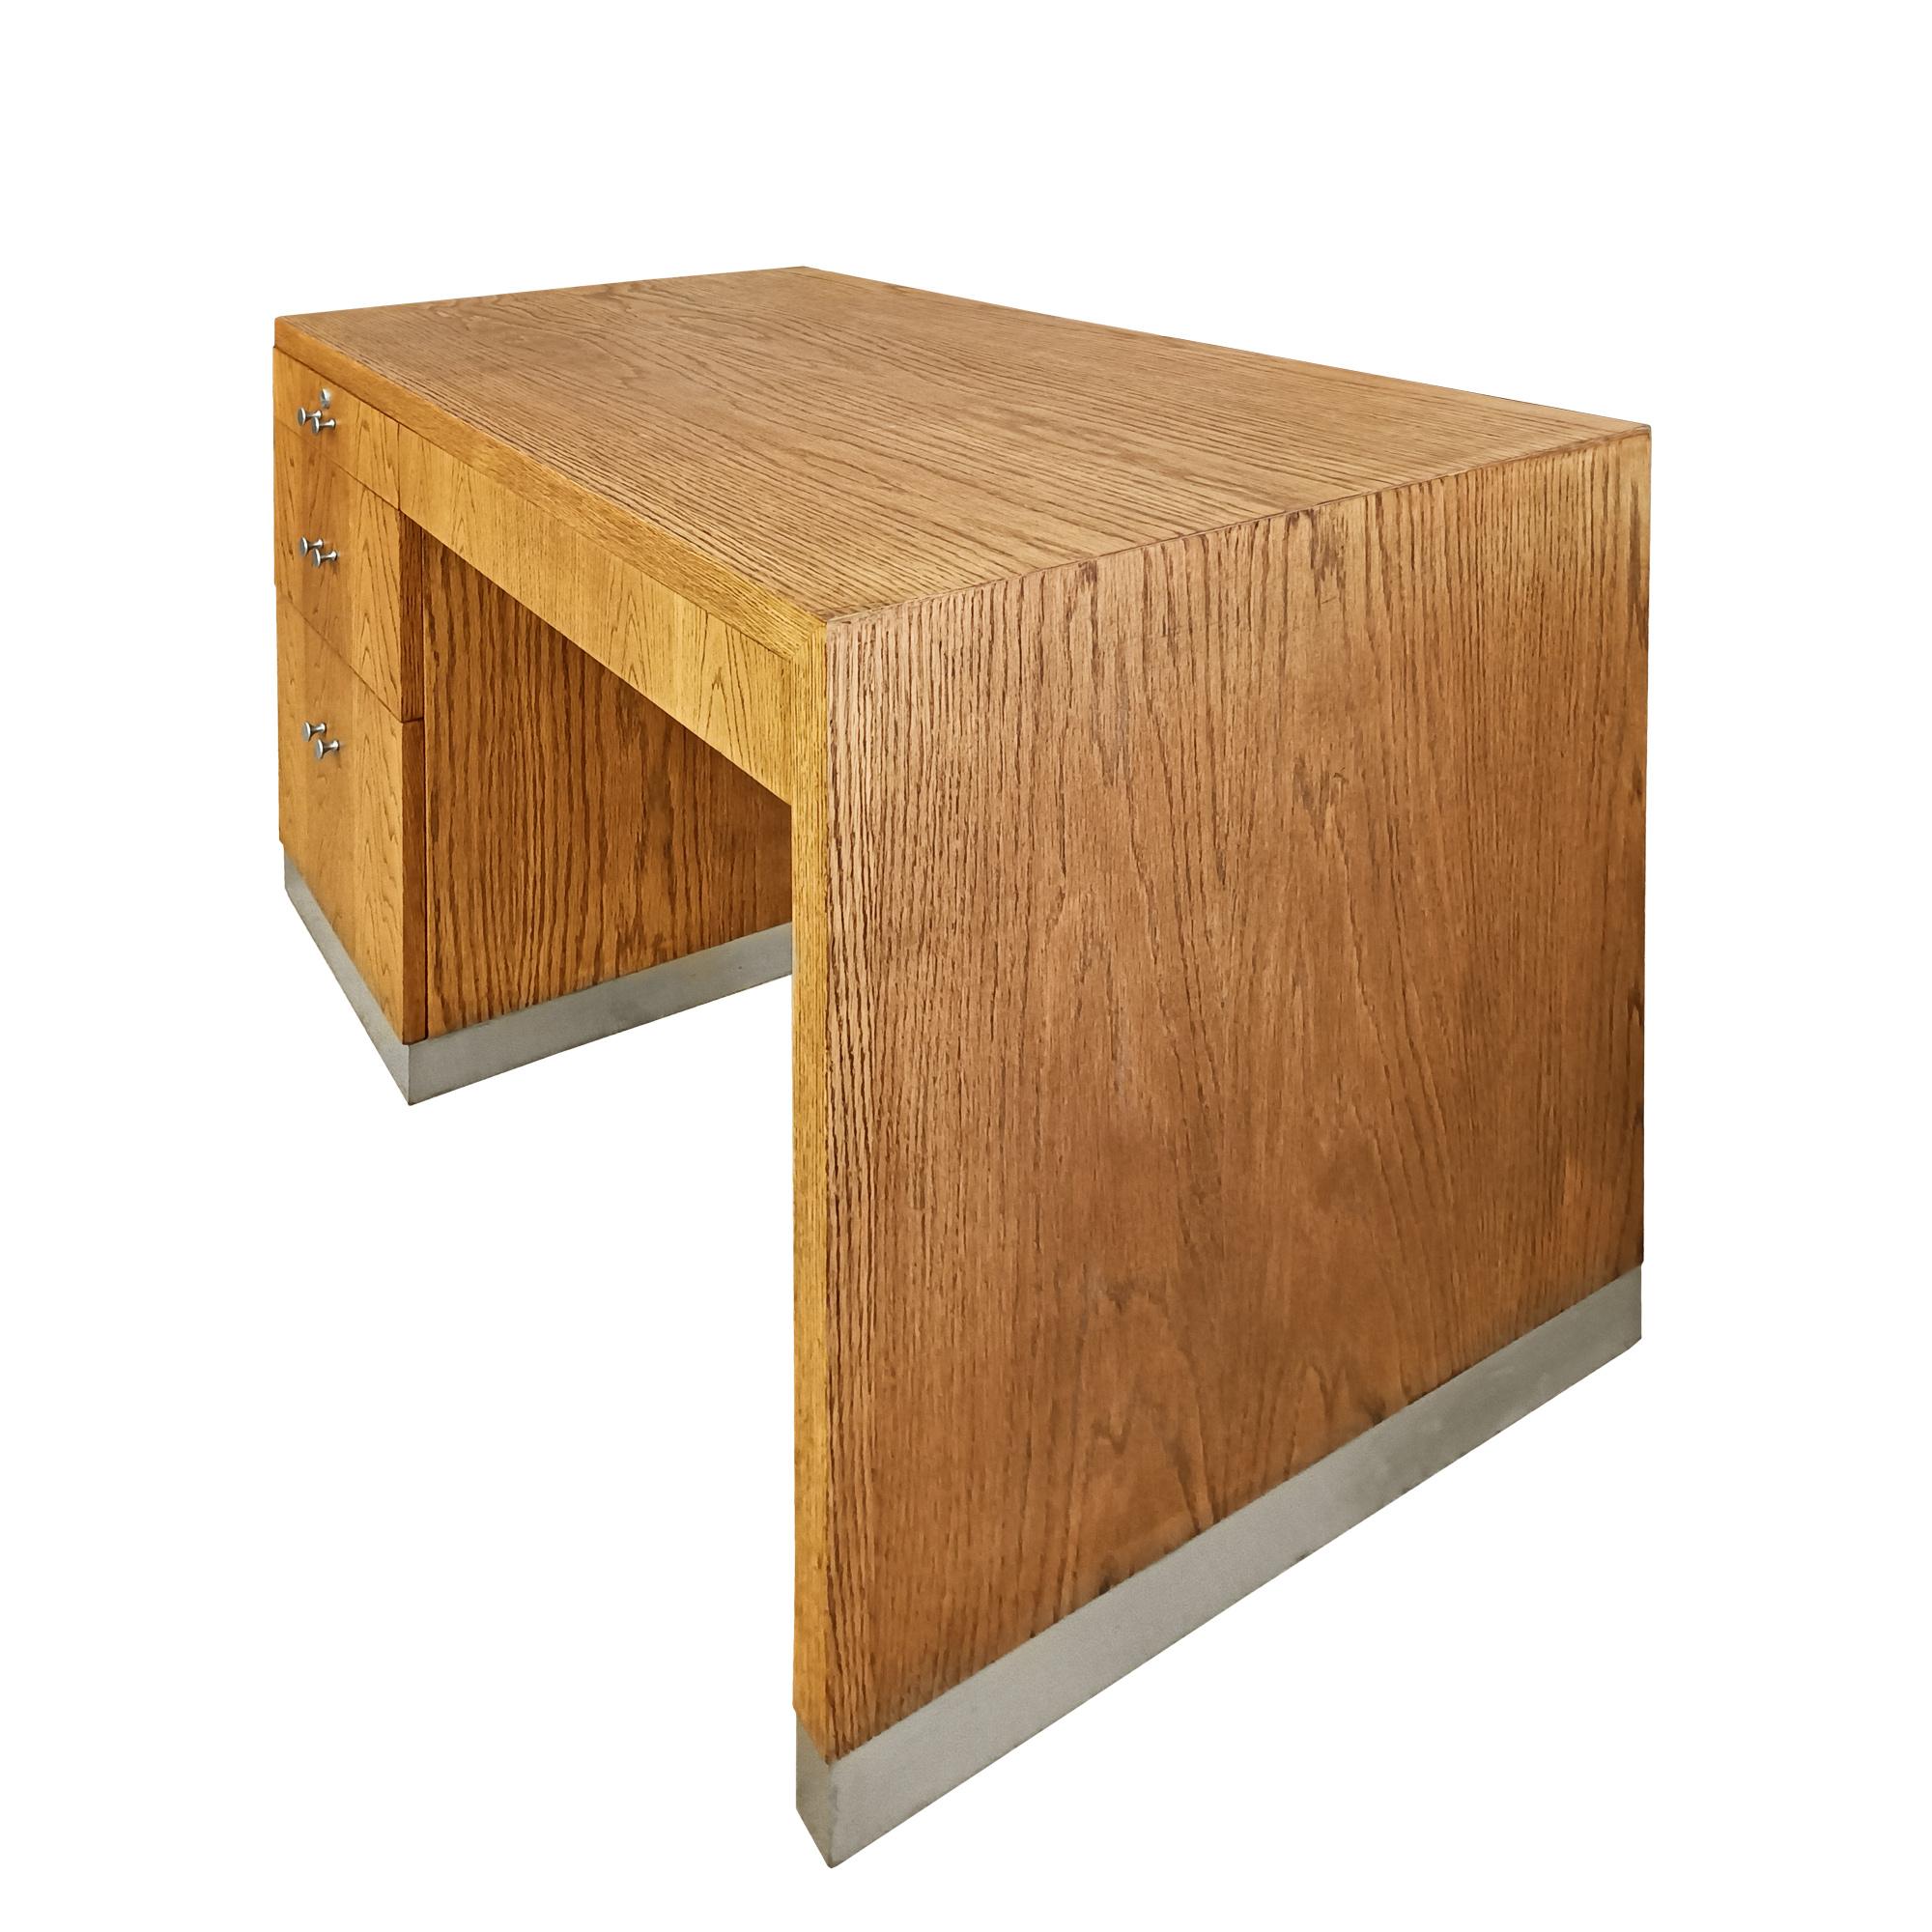 Art Deco drawer unit desk, four drawers, wood with oak veneer, resting on an aluminium-covered base. Aluminium handles. Satiny varnish finishing.

France circa 1930